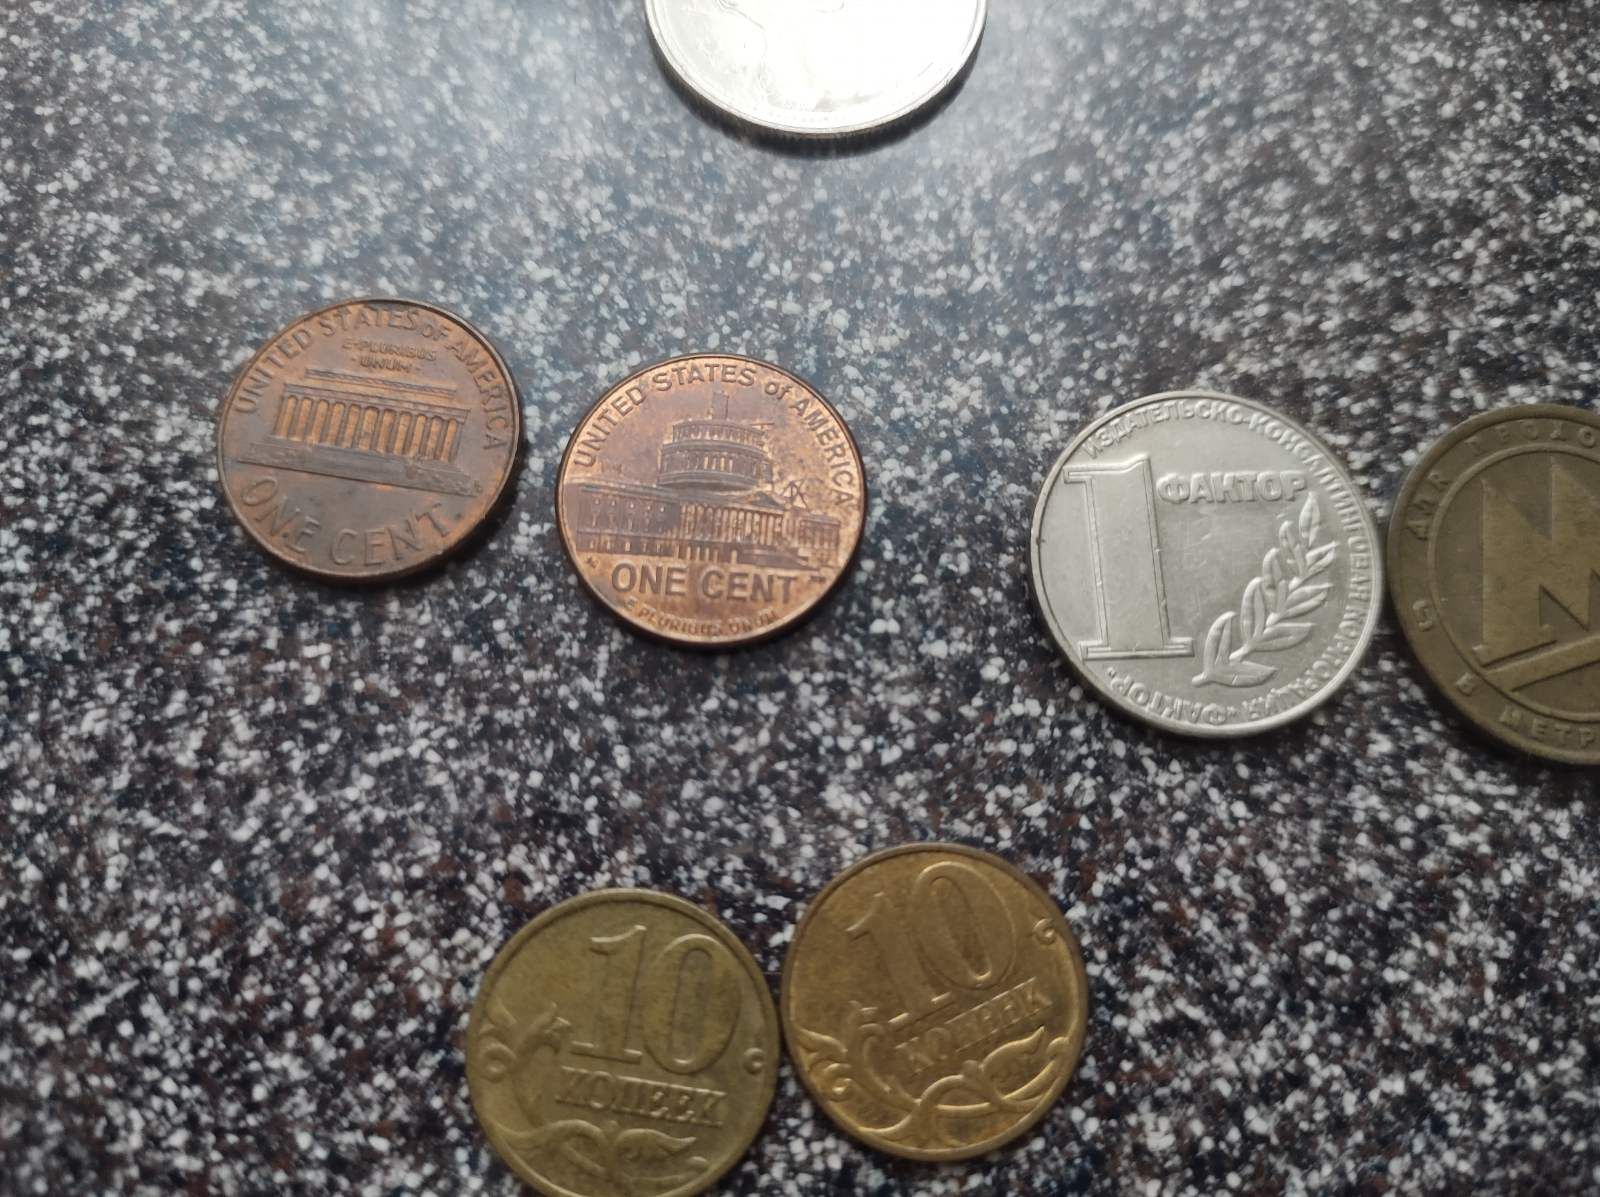 Frank, bani, cent, zlote, pence монеты Греции, Хорватии,Польши, США